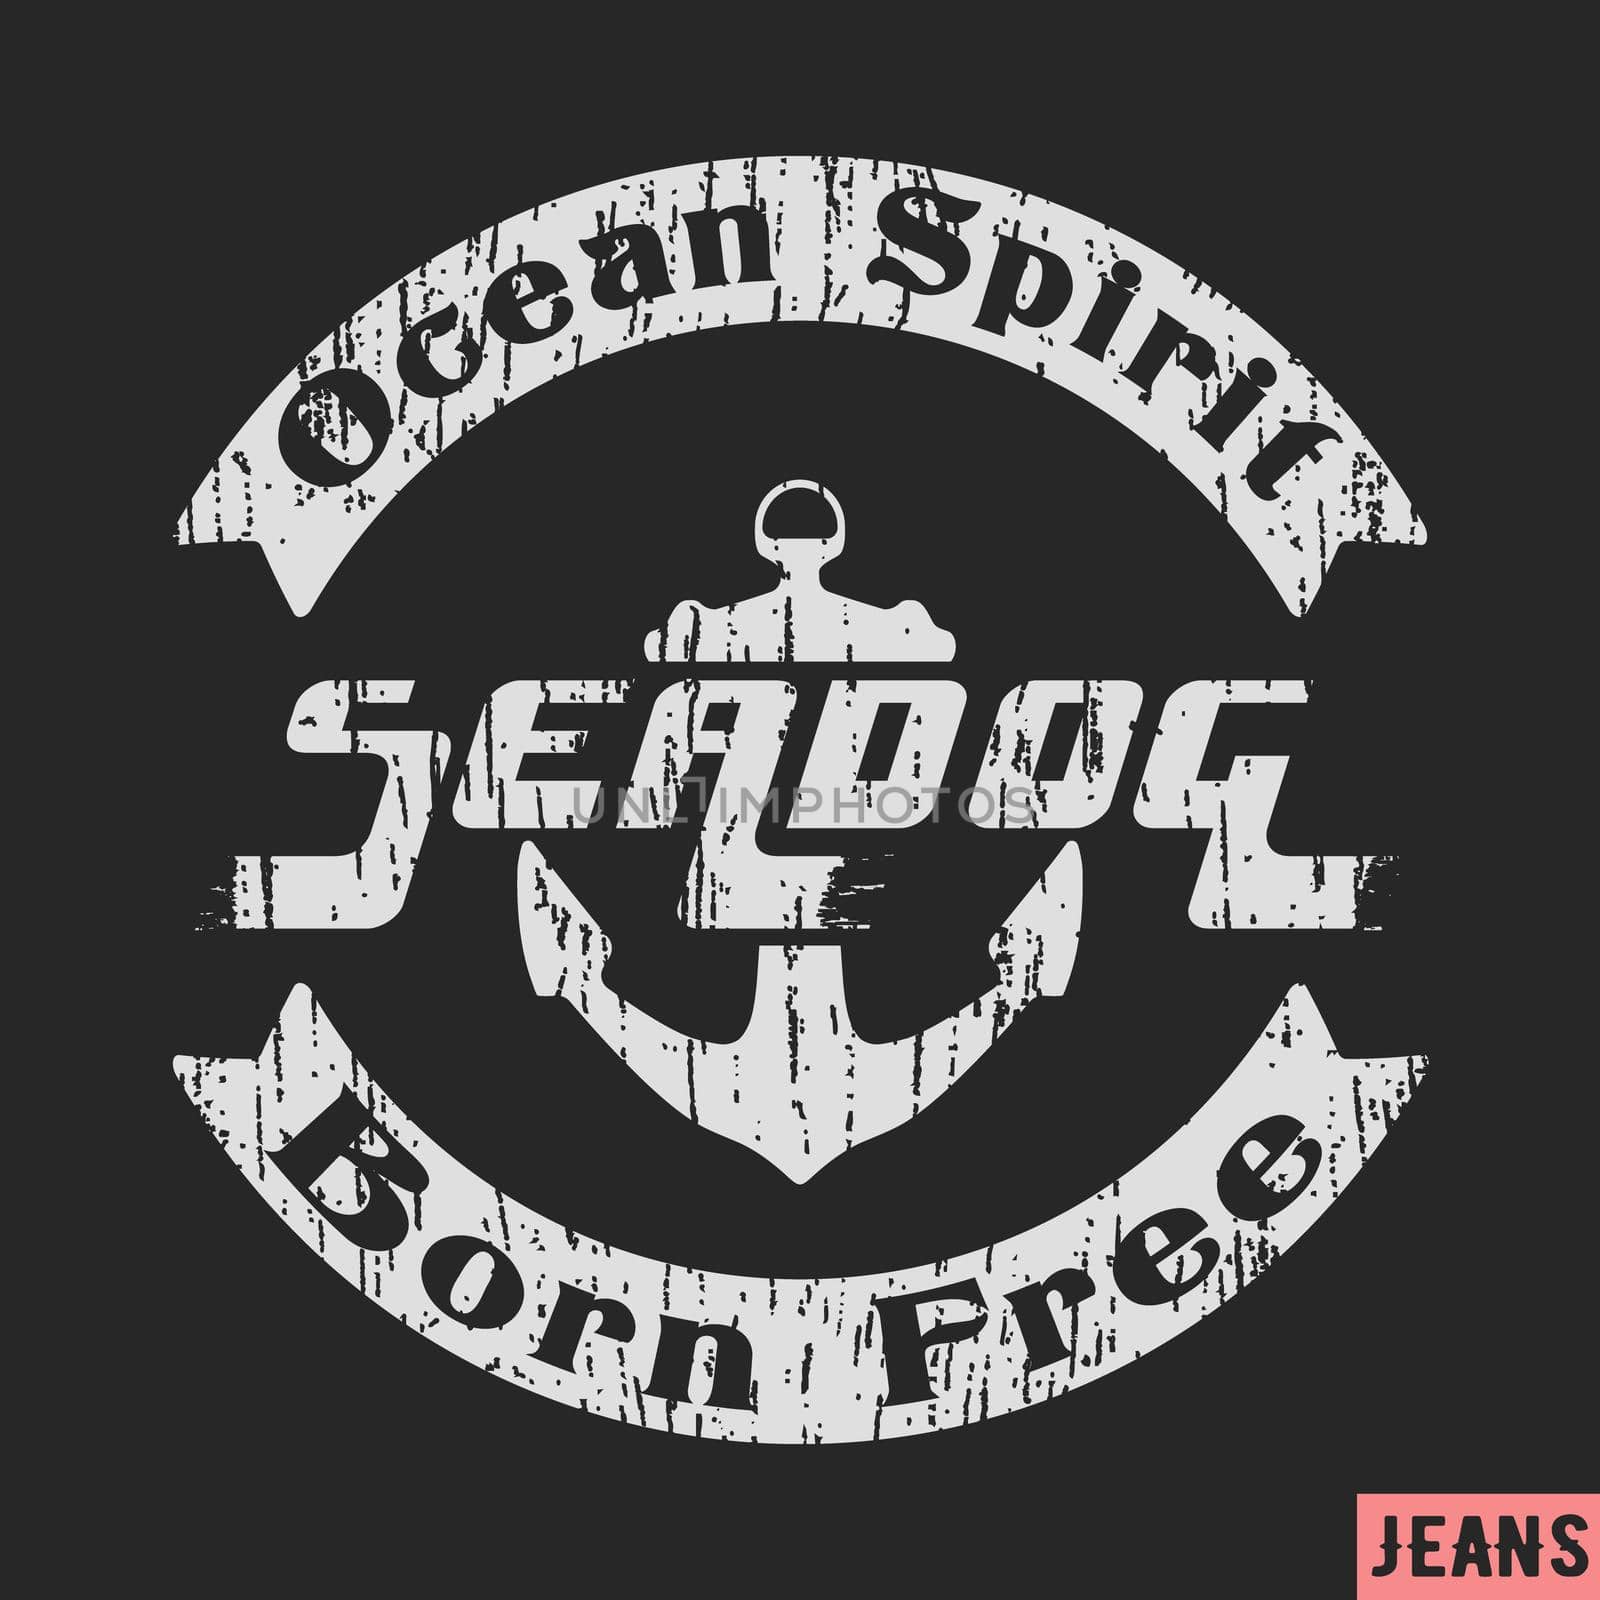 T-shirt print design. Sea dog vintage stamp. Printing and badge applique label t-shirts, jeans, casual wear. Vector illustration.